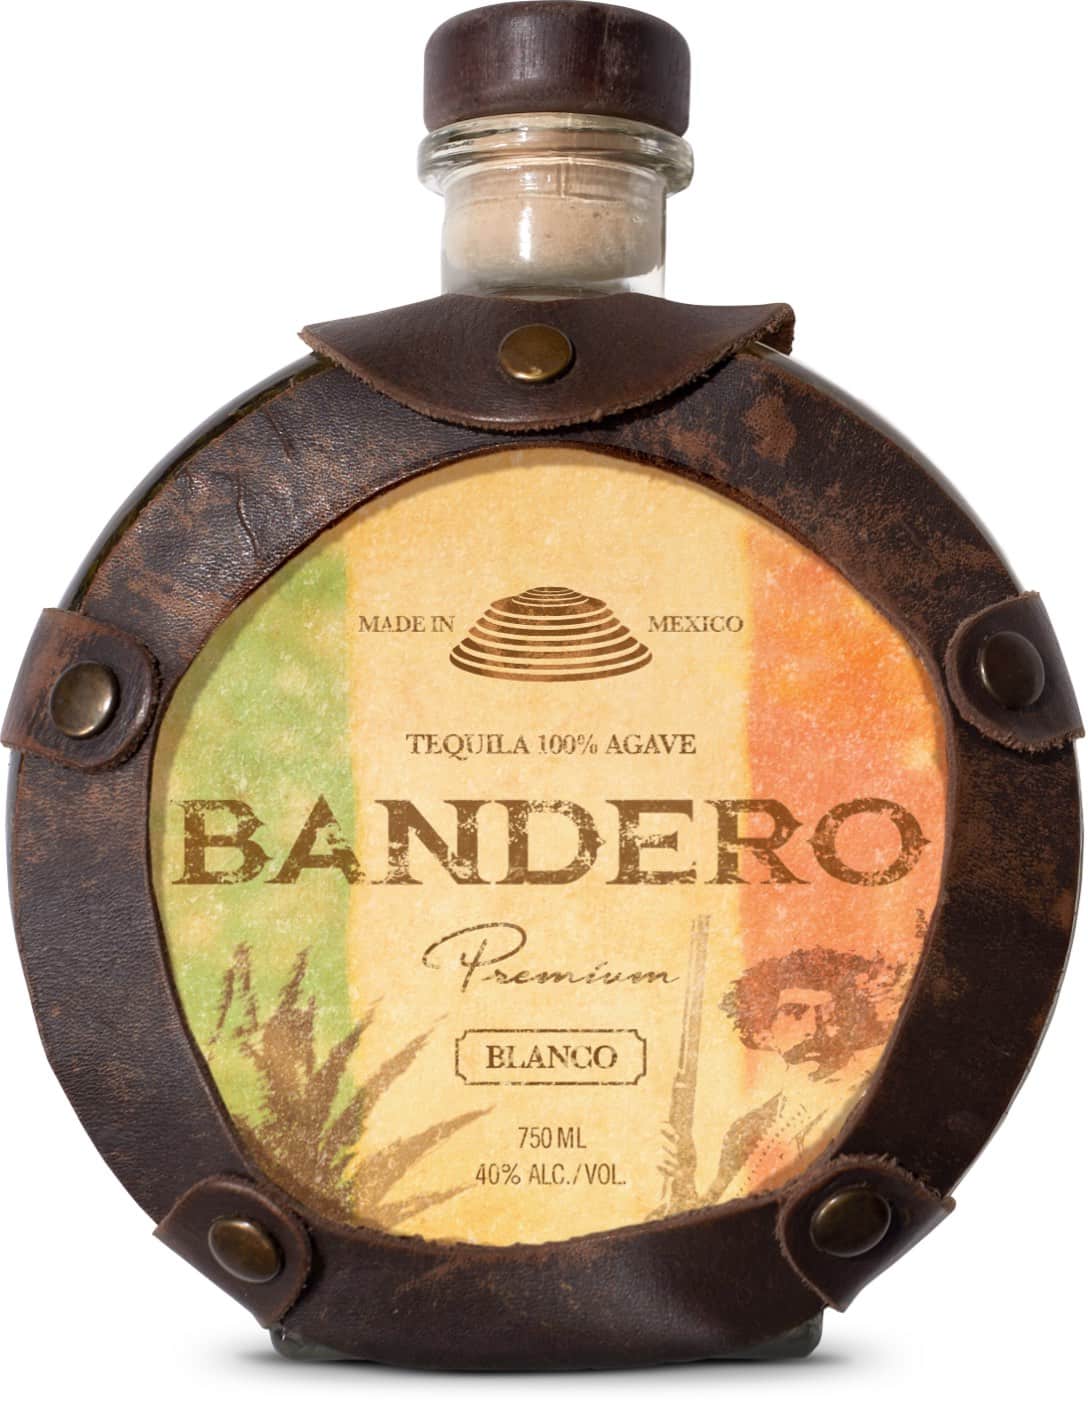 Buy Bandero Blanco Tequila Online -Craft City